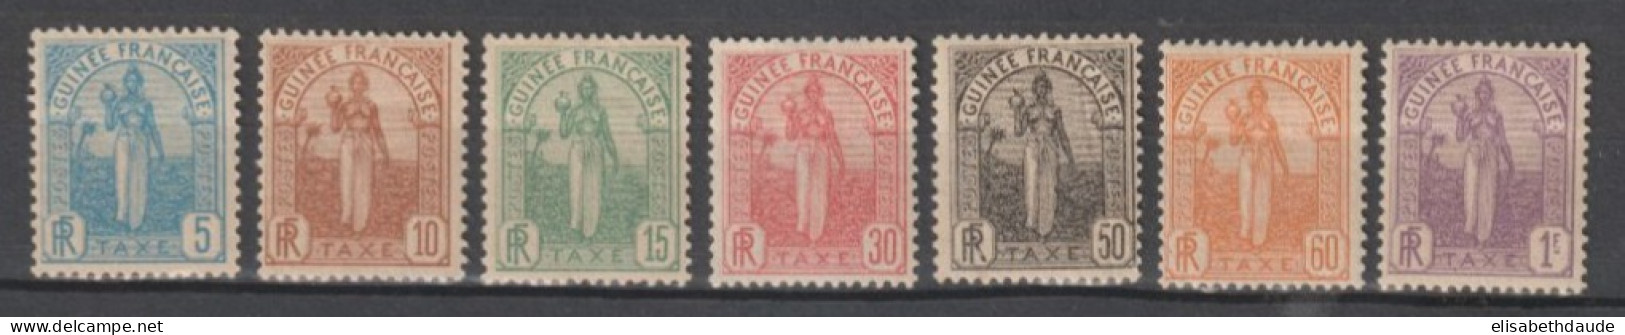 GUINEE - 1905 - SERIE TAXE COMPLETE YVERT N°1/7 * MH - COTE = 106 EUR - Nuovi